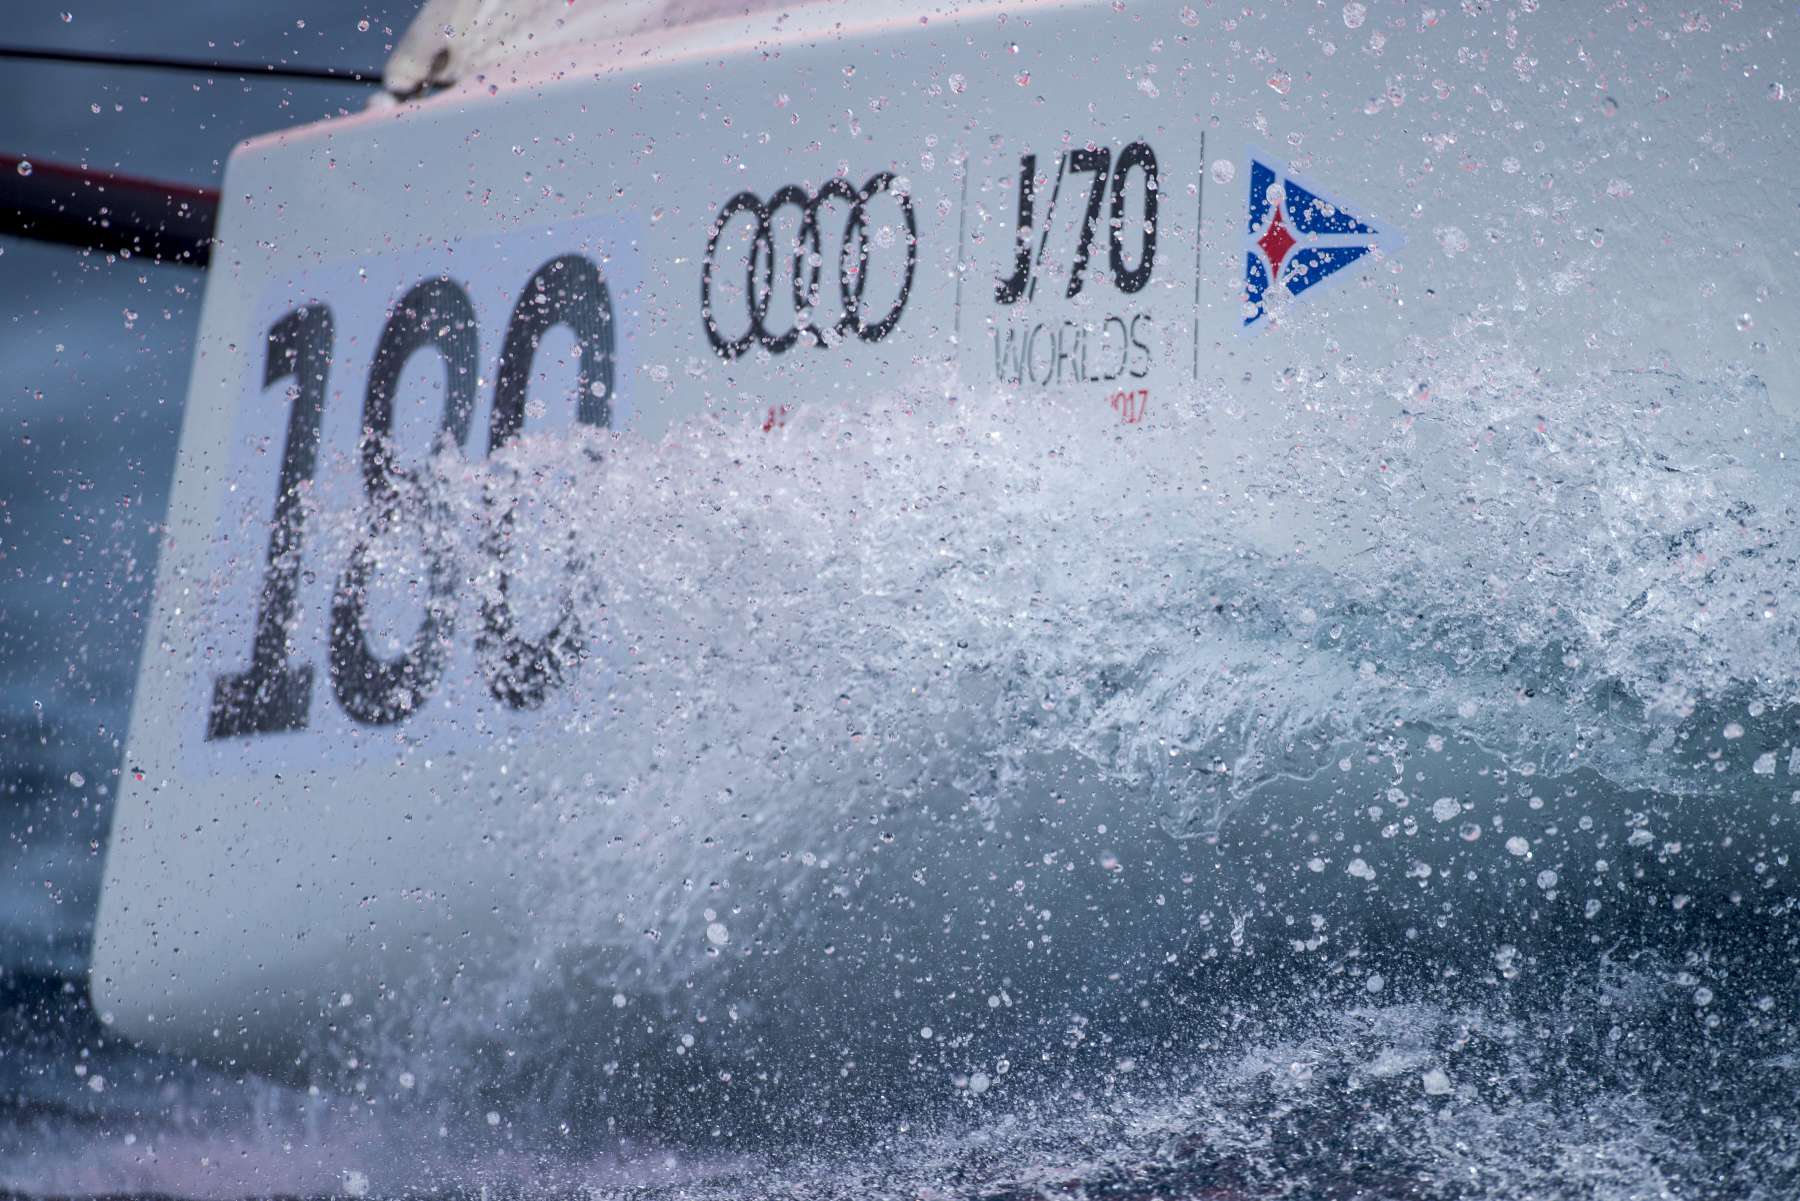 Audi J/70 World Championship - Video Day 1 online  - NEWS - Yacht Club Costa Smeralda